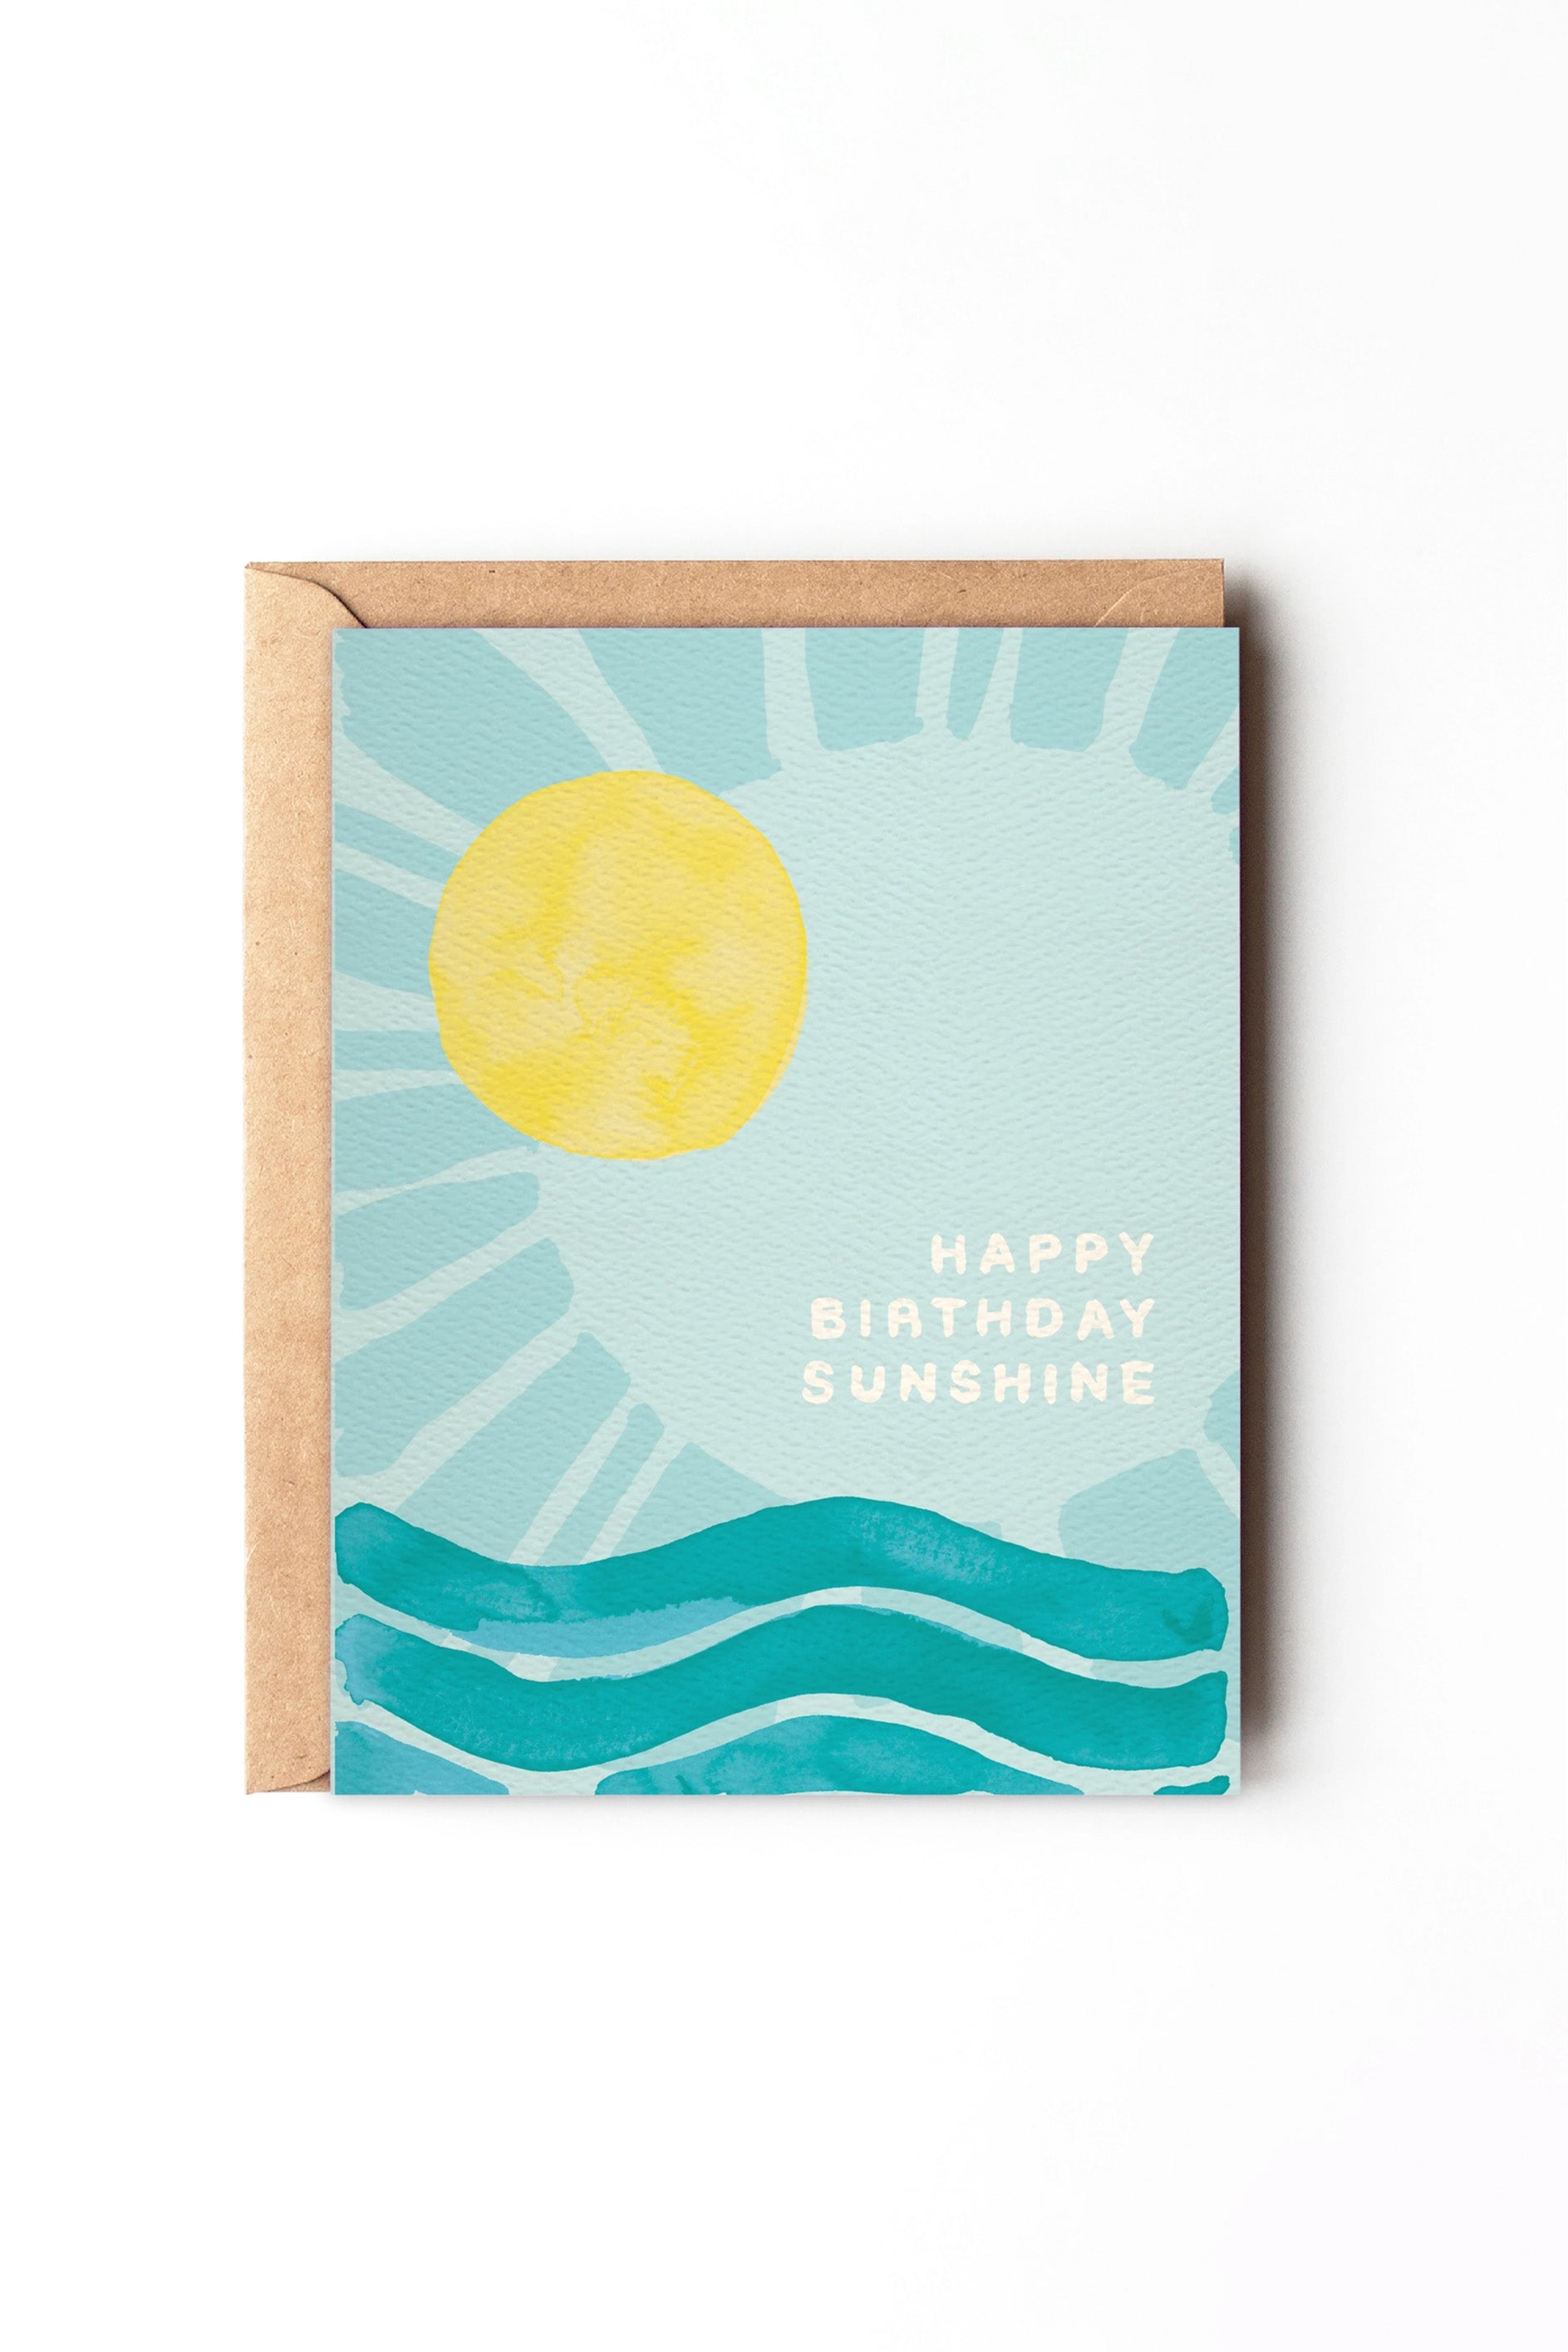 Happy Birthday Sunshine - Uplifting Summer Birthday Card - Greeting Card - The Green Brick Boutique